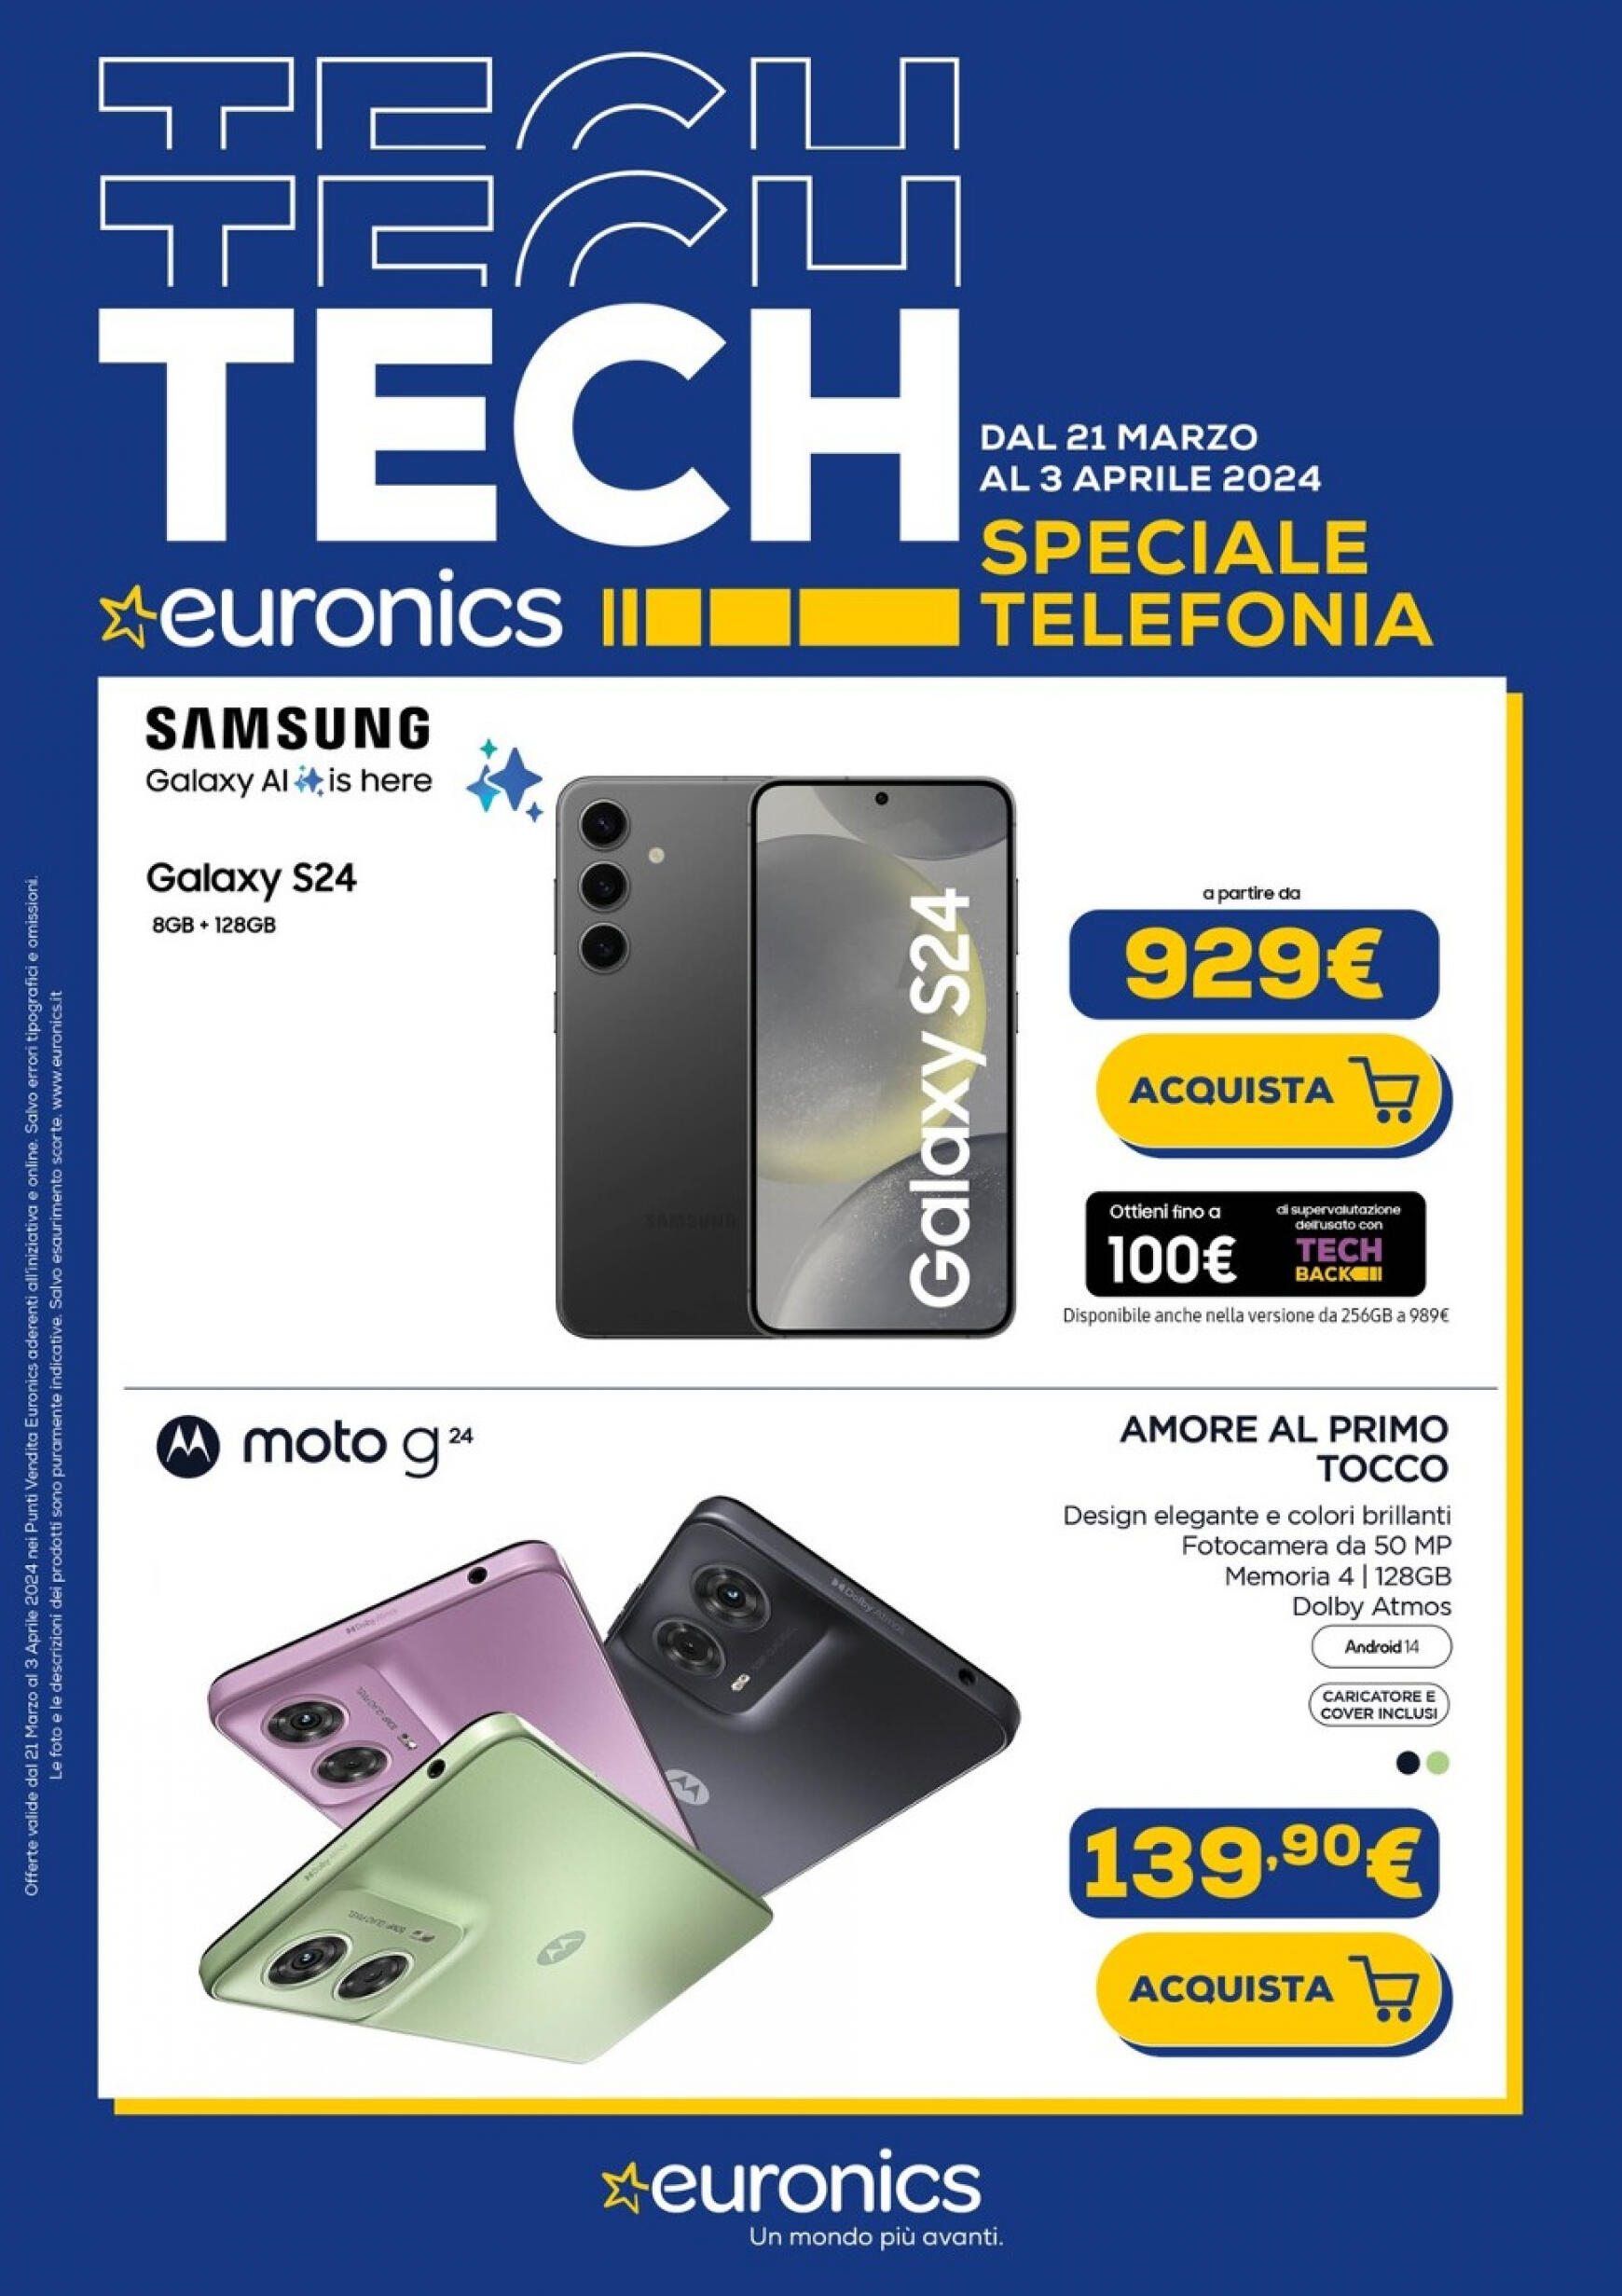 euronics - Euronics - Speciale Telefonia valido da 21.03.2024